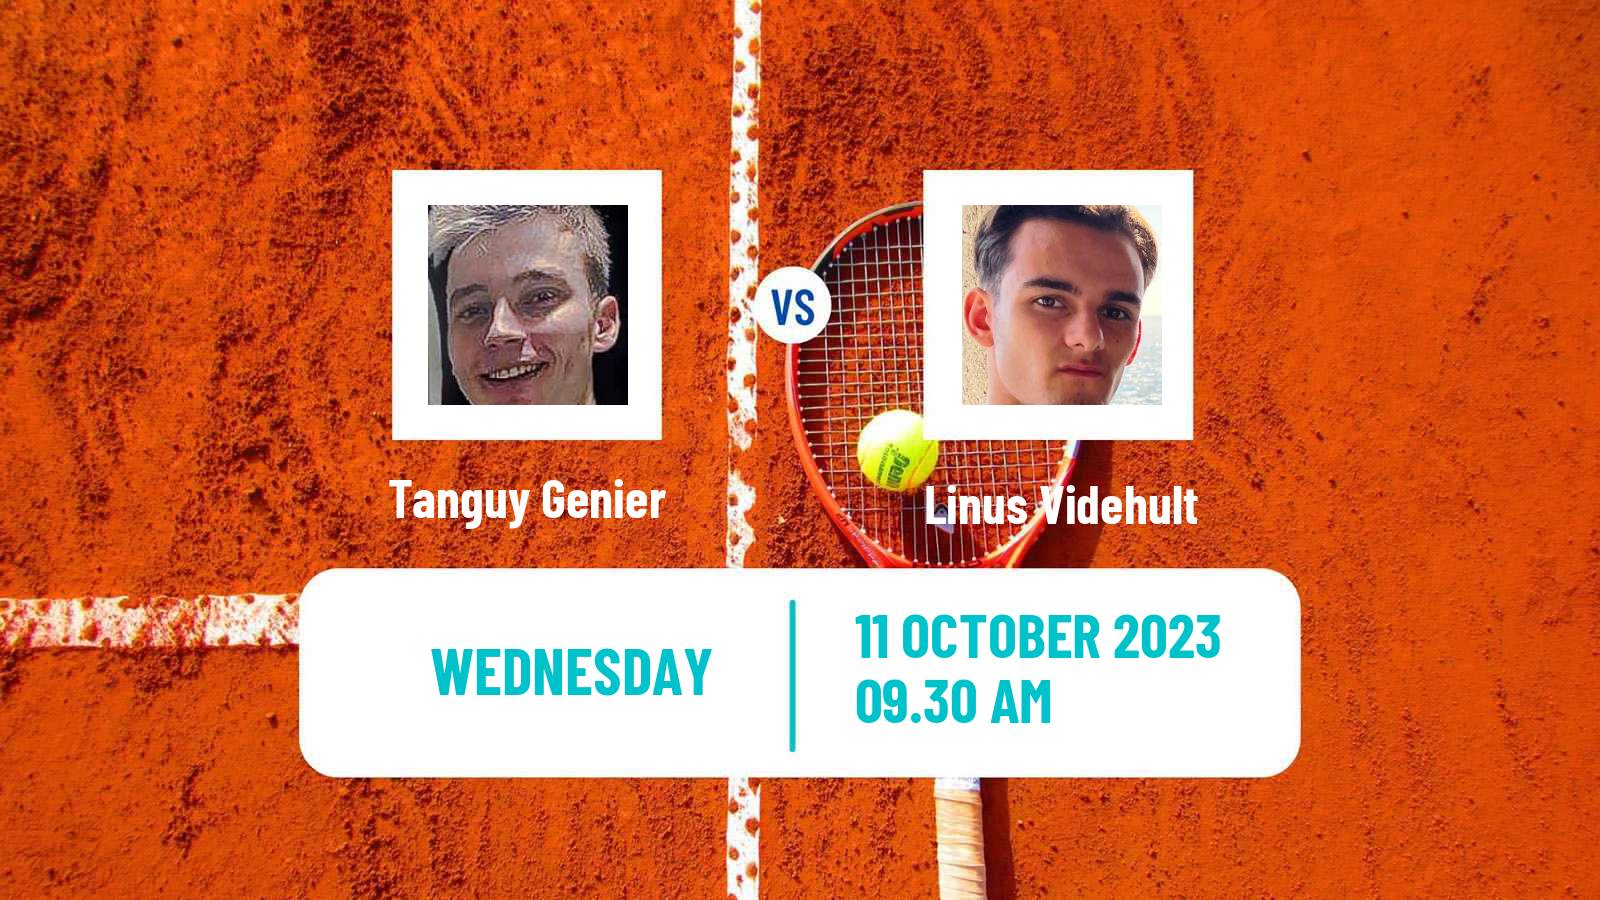 Tennis ITF M15 Doha 3 Men Tanguy Genier - Linus Videhult